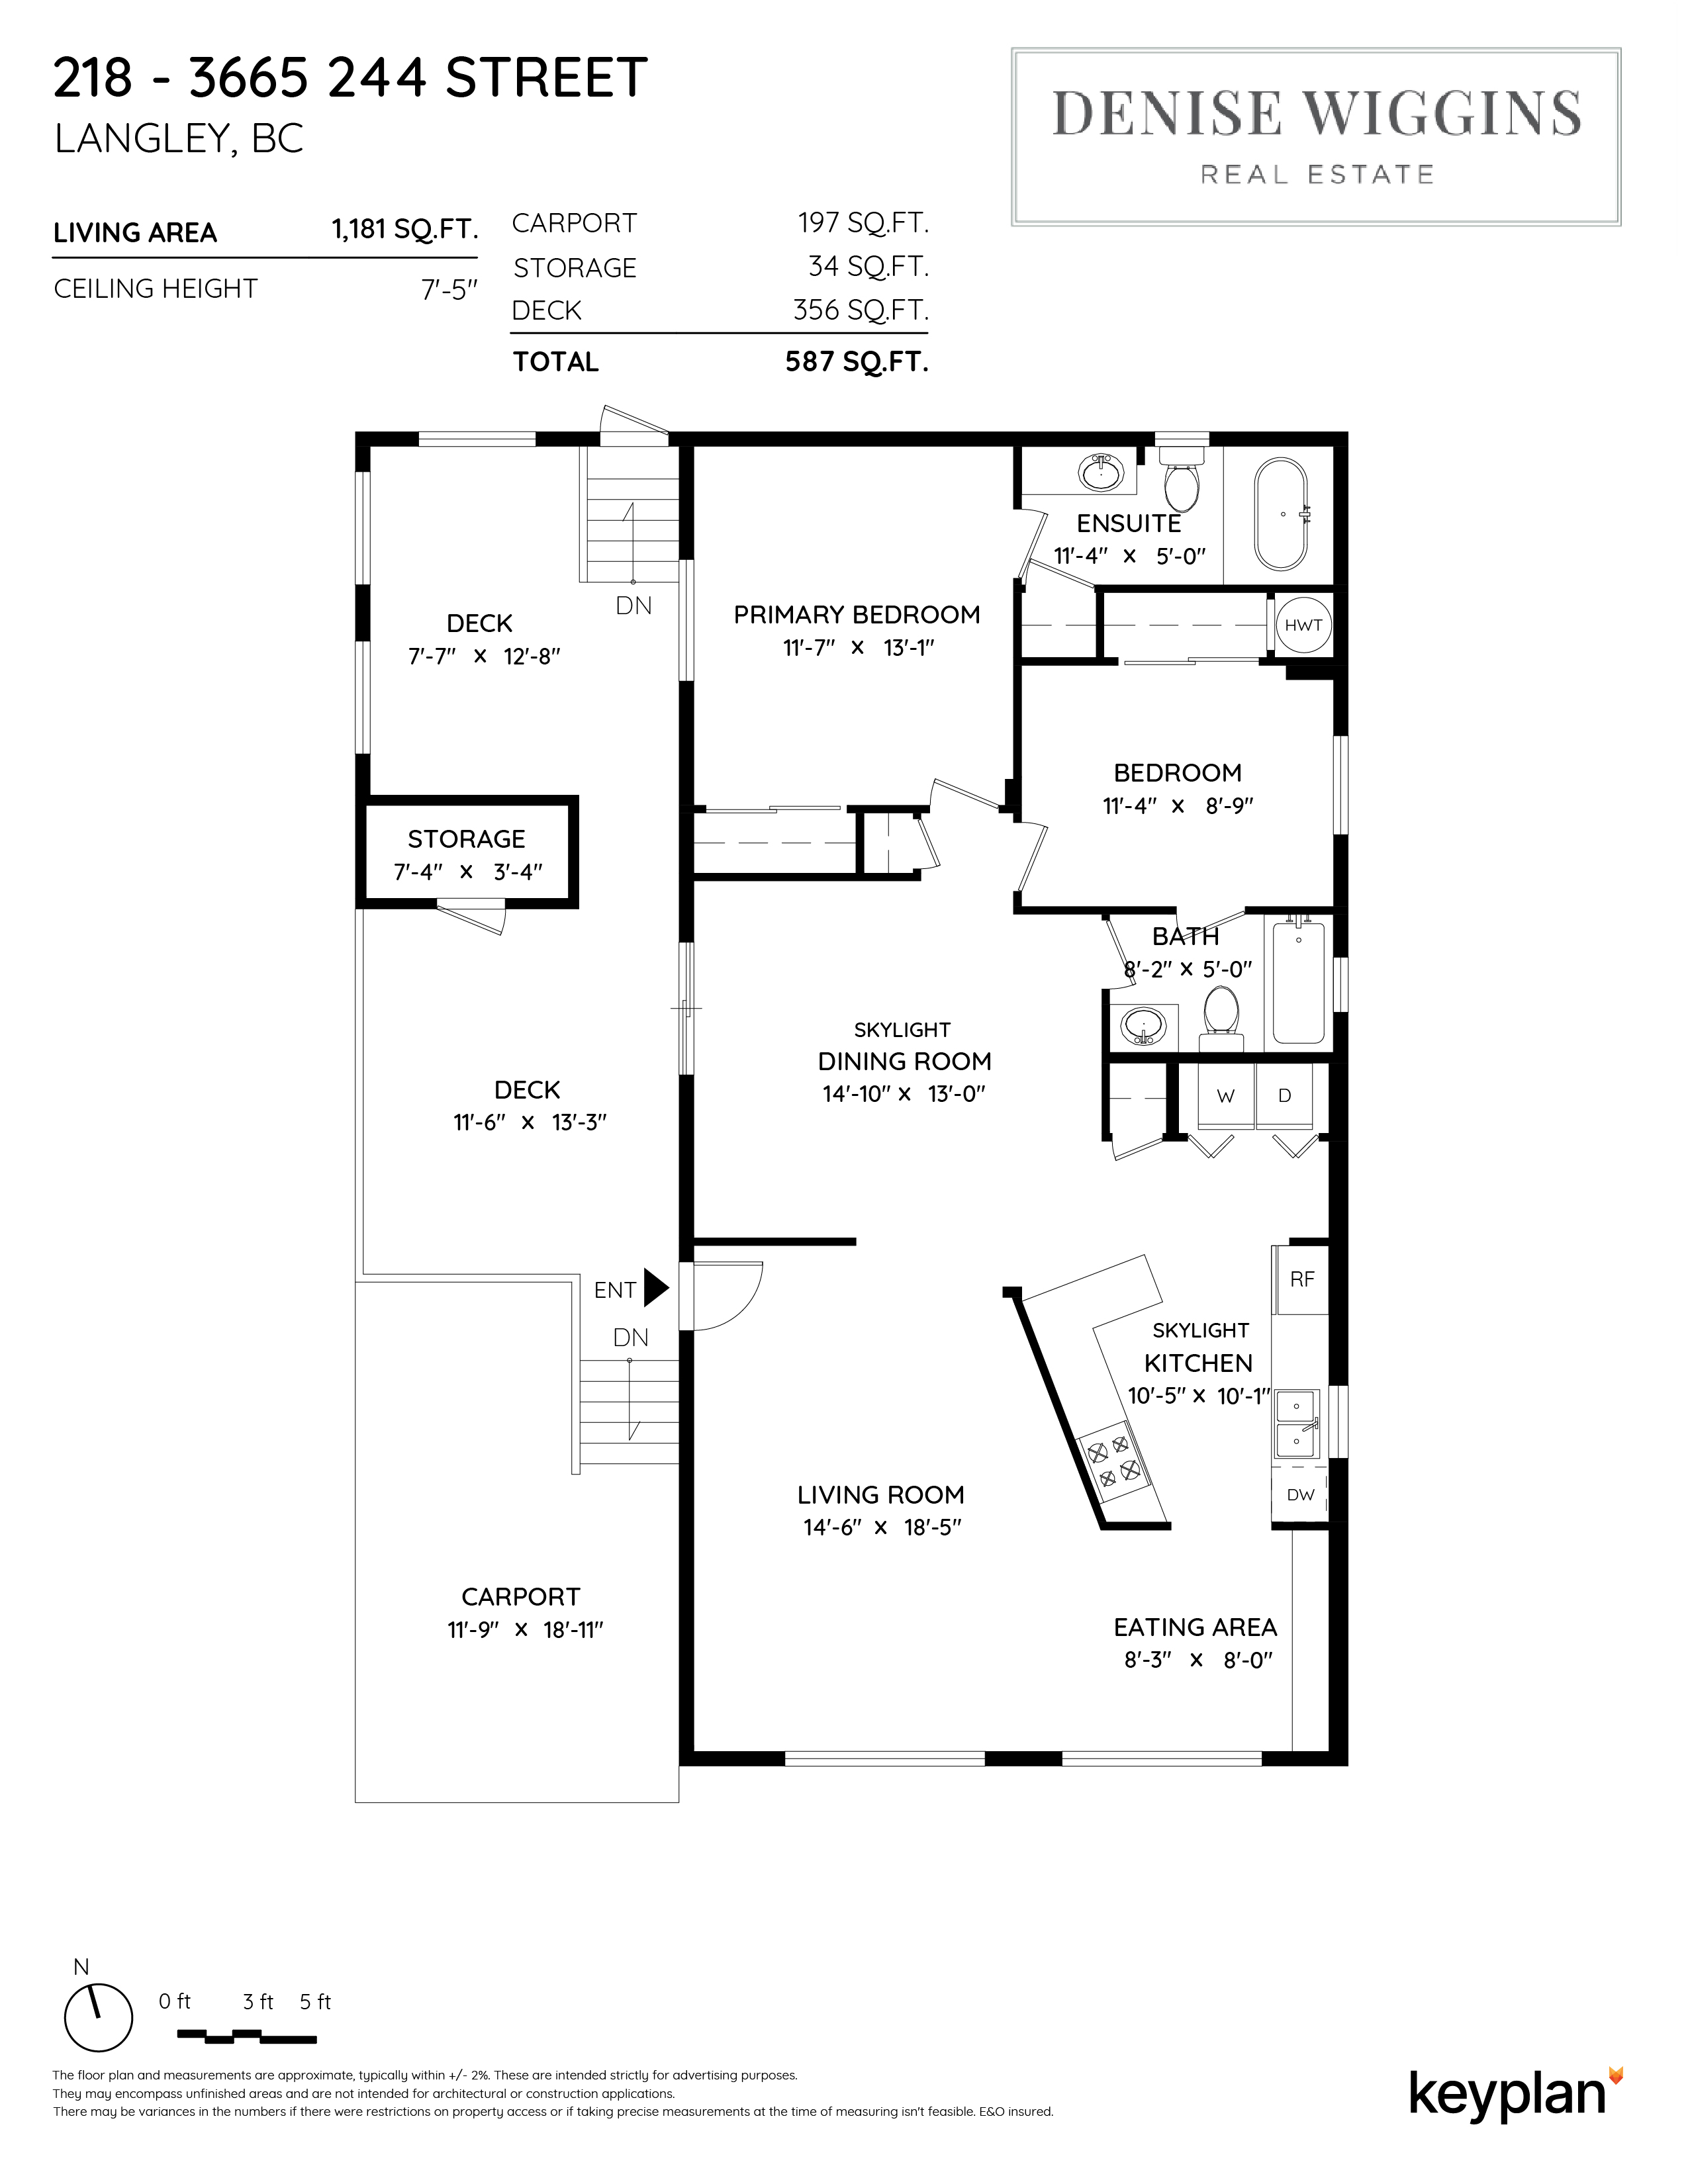 Denise Wiggins - Unit 218 - 3665 244 Street, Langley, BC, Canada | Floor Plan 1